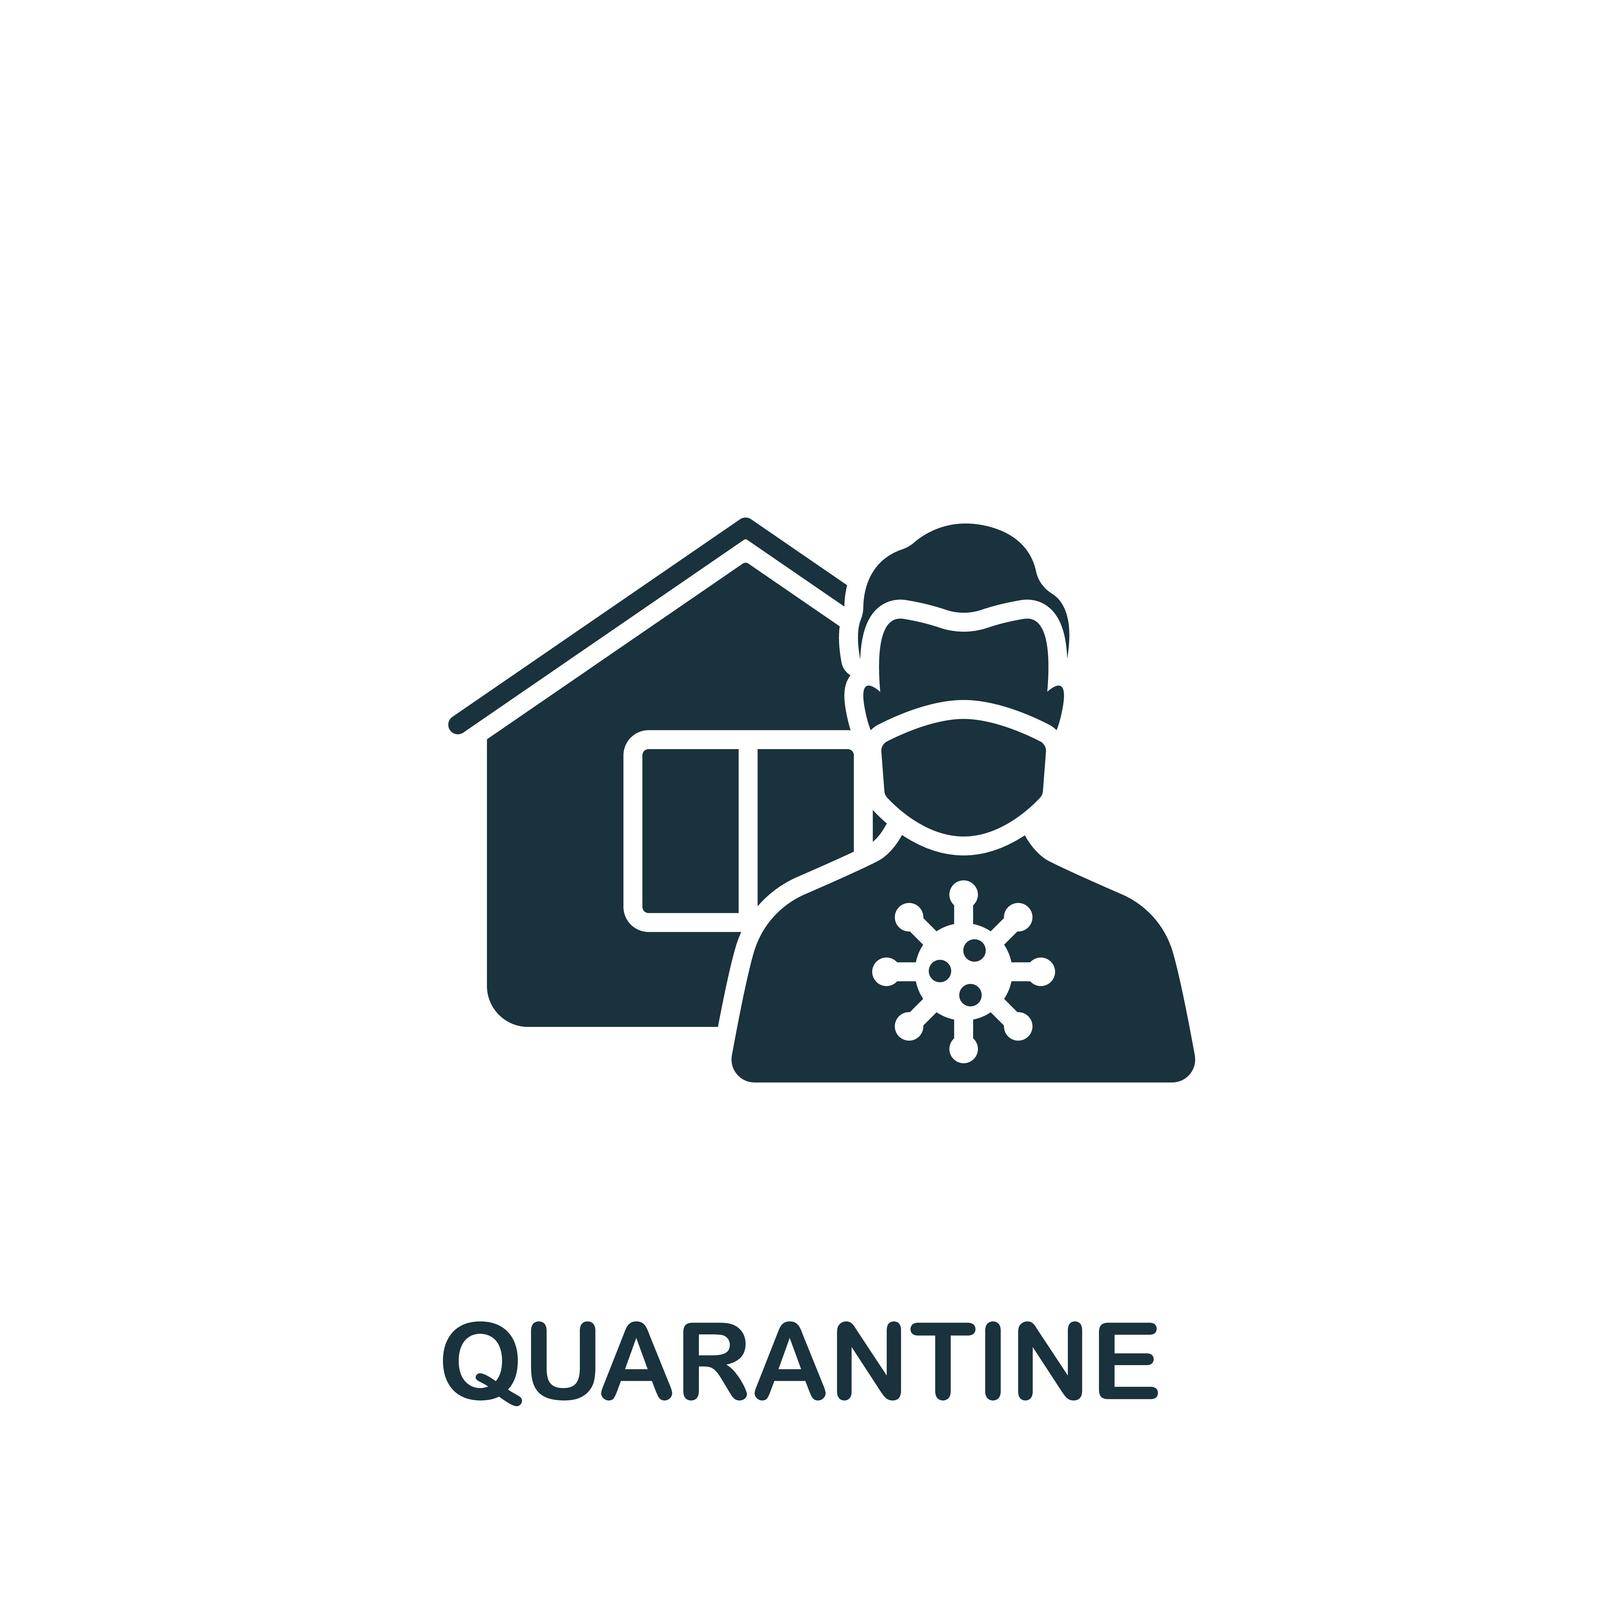 Quarantine icon. Monochrome simple Quarantine icon for templates, web design and infographics by simakovavector